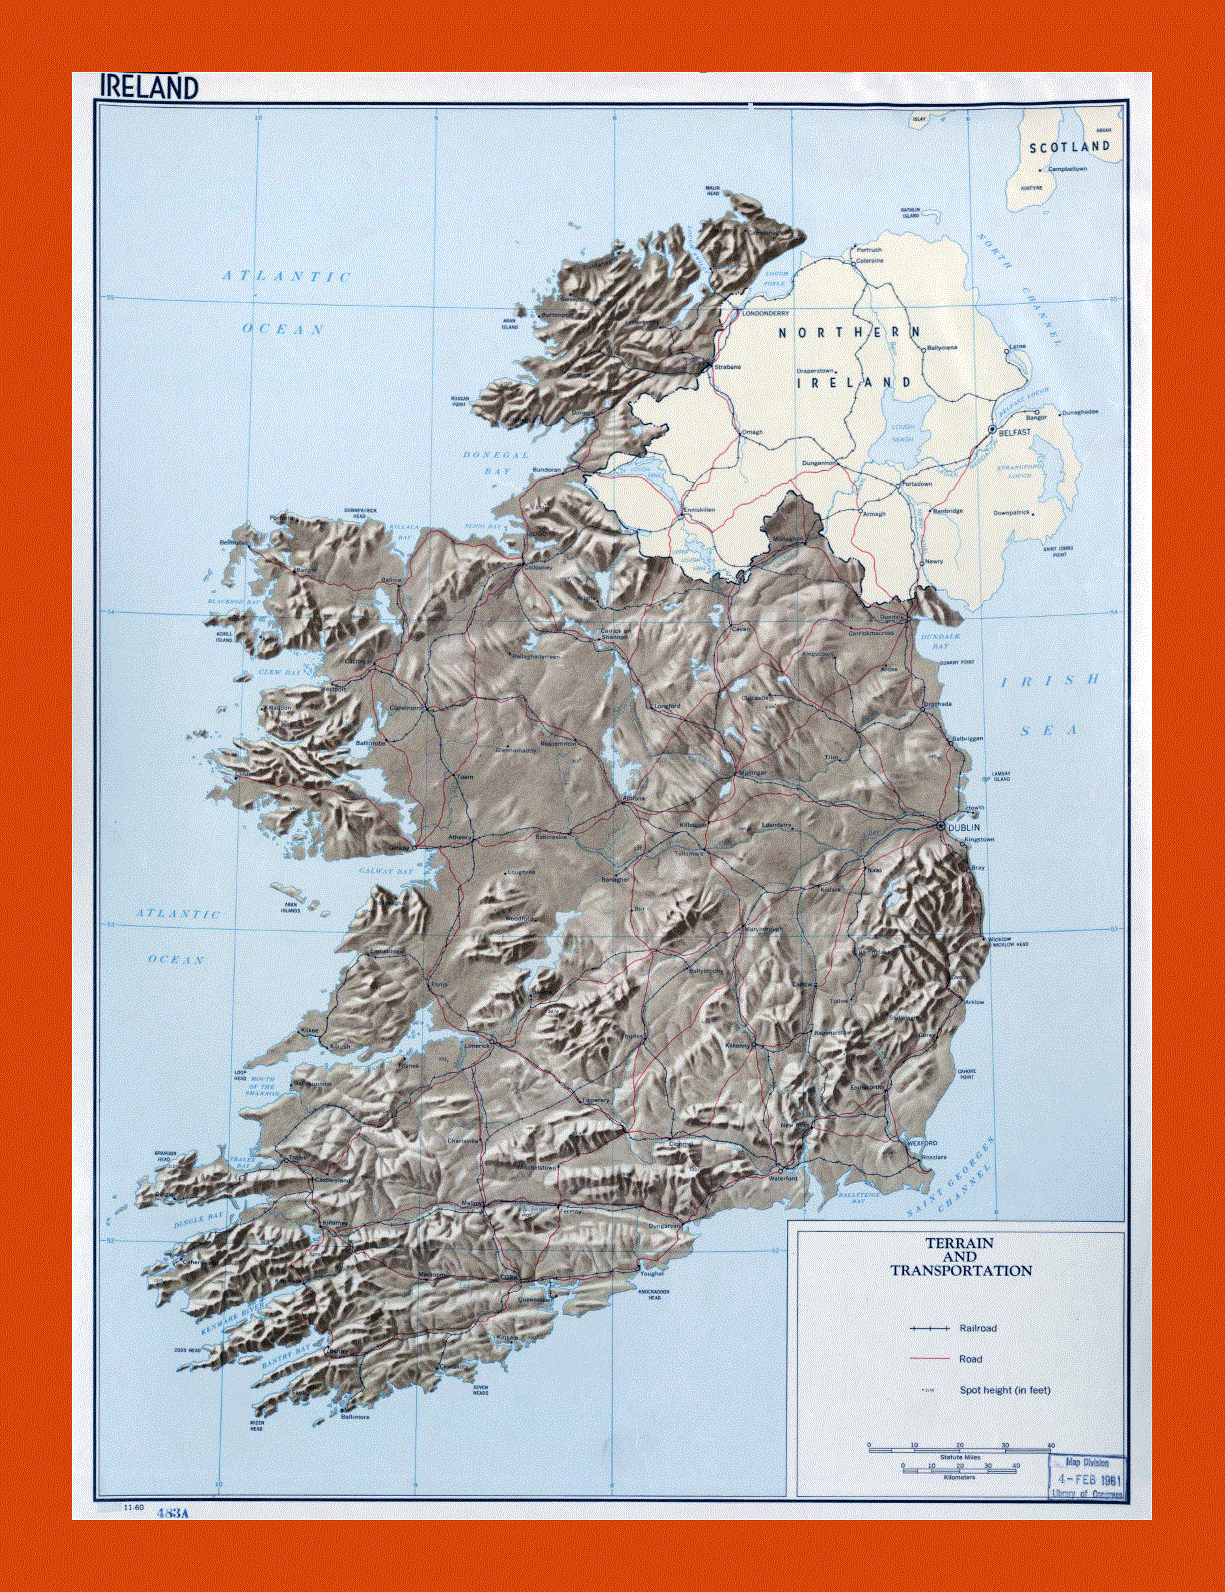 Terrain and transportation map of Ireland - 1960